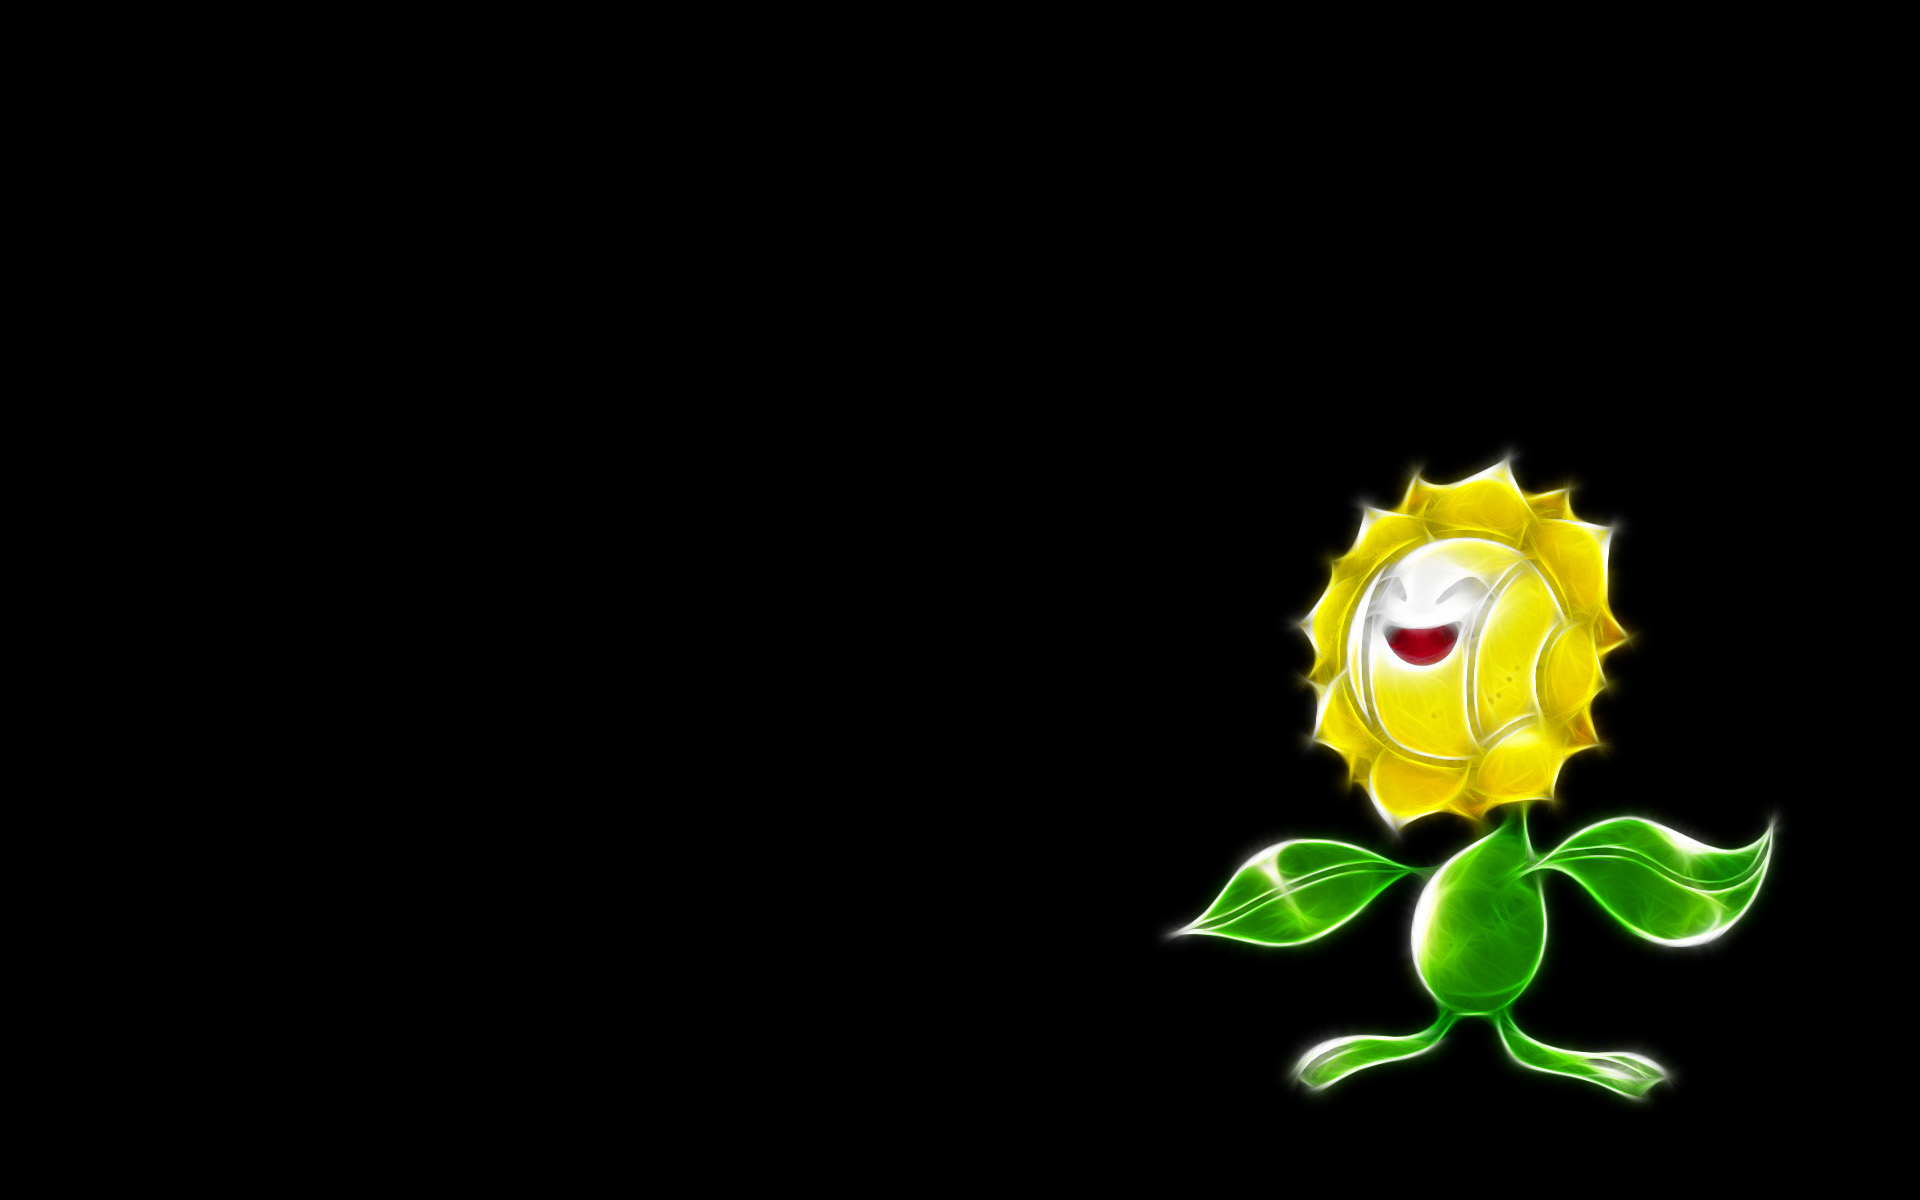 A vibrant anime artwork of Pokémon's Sunflora, a grass-type Pokémon.